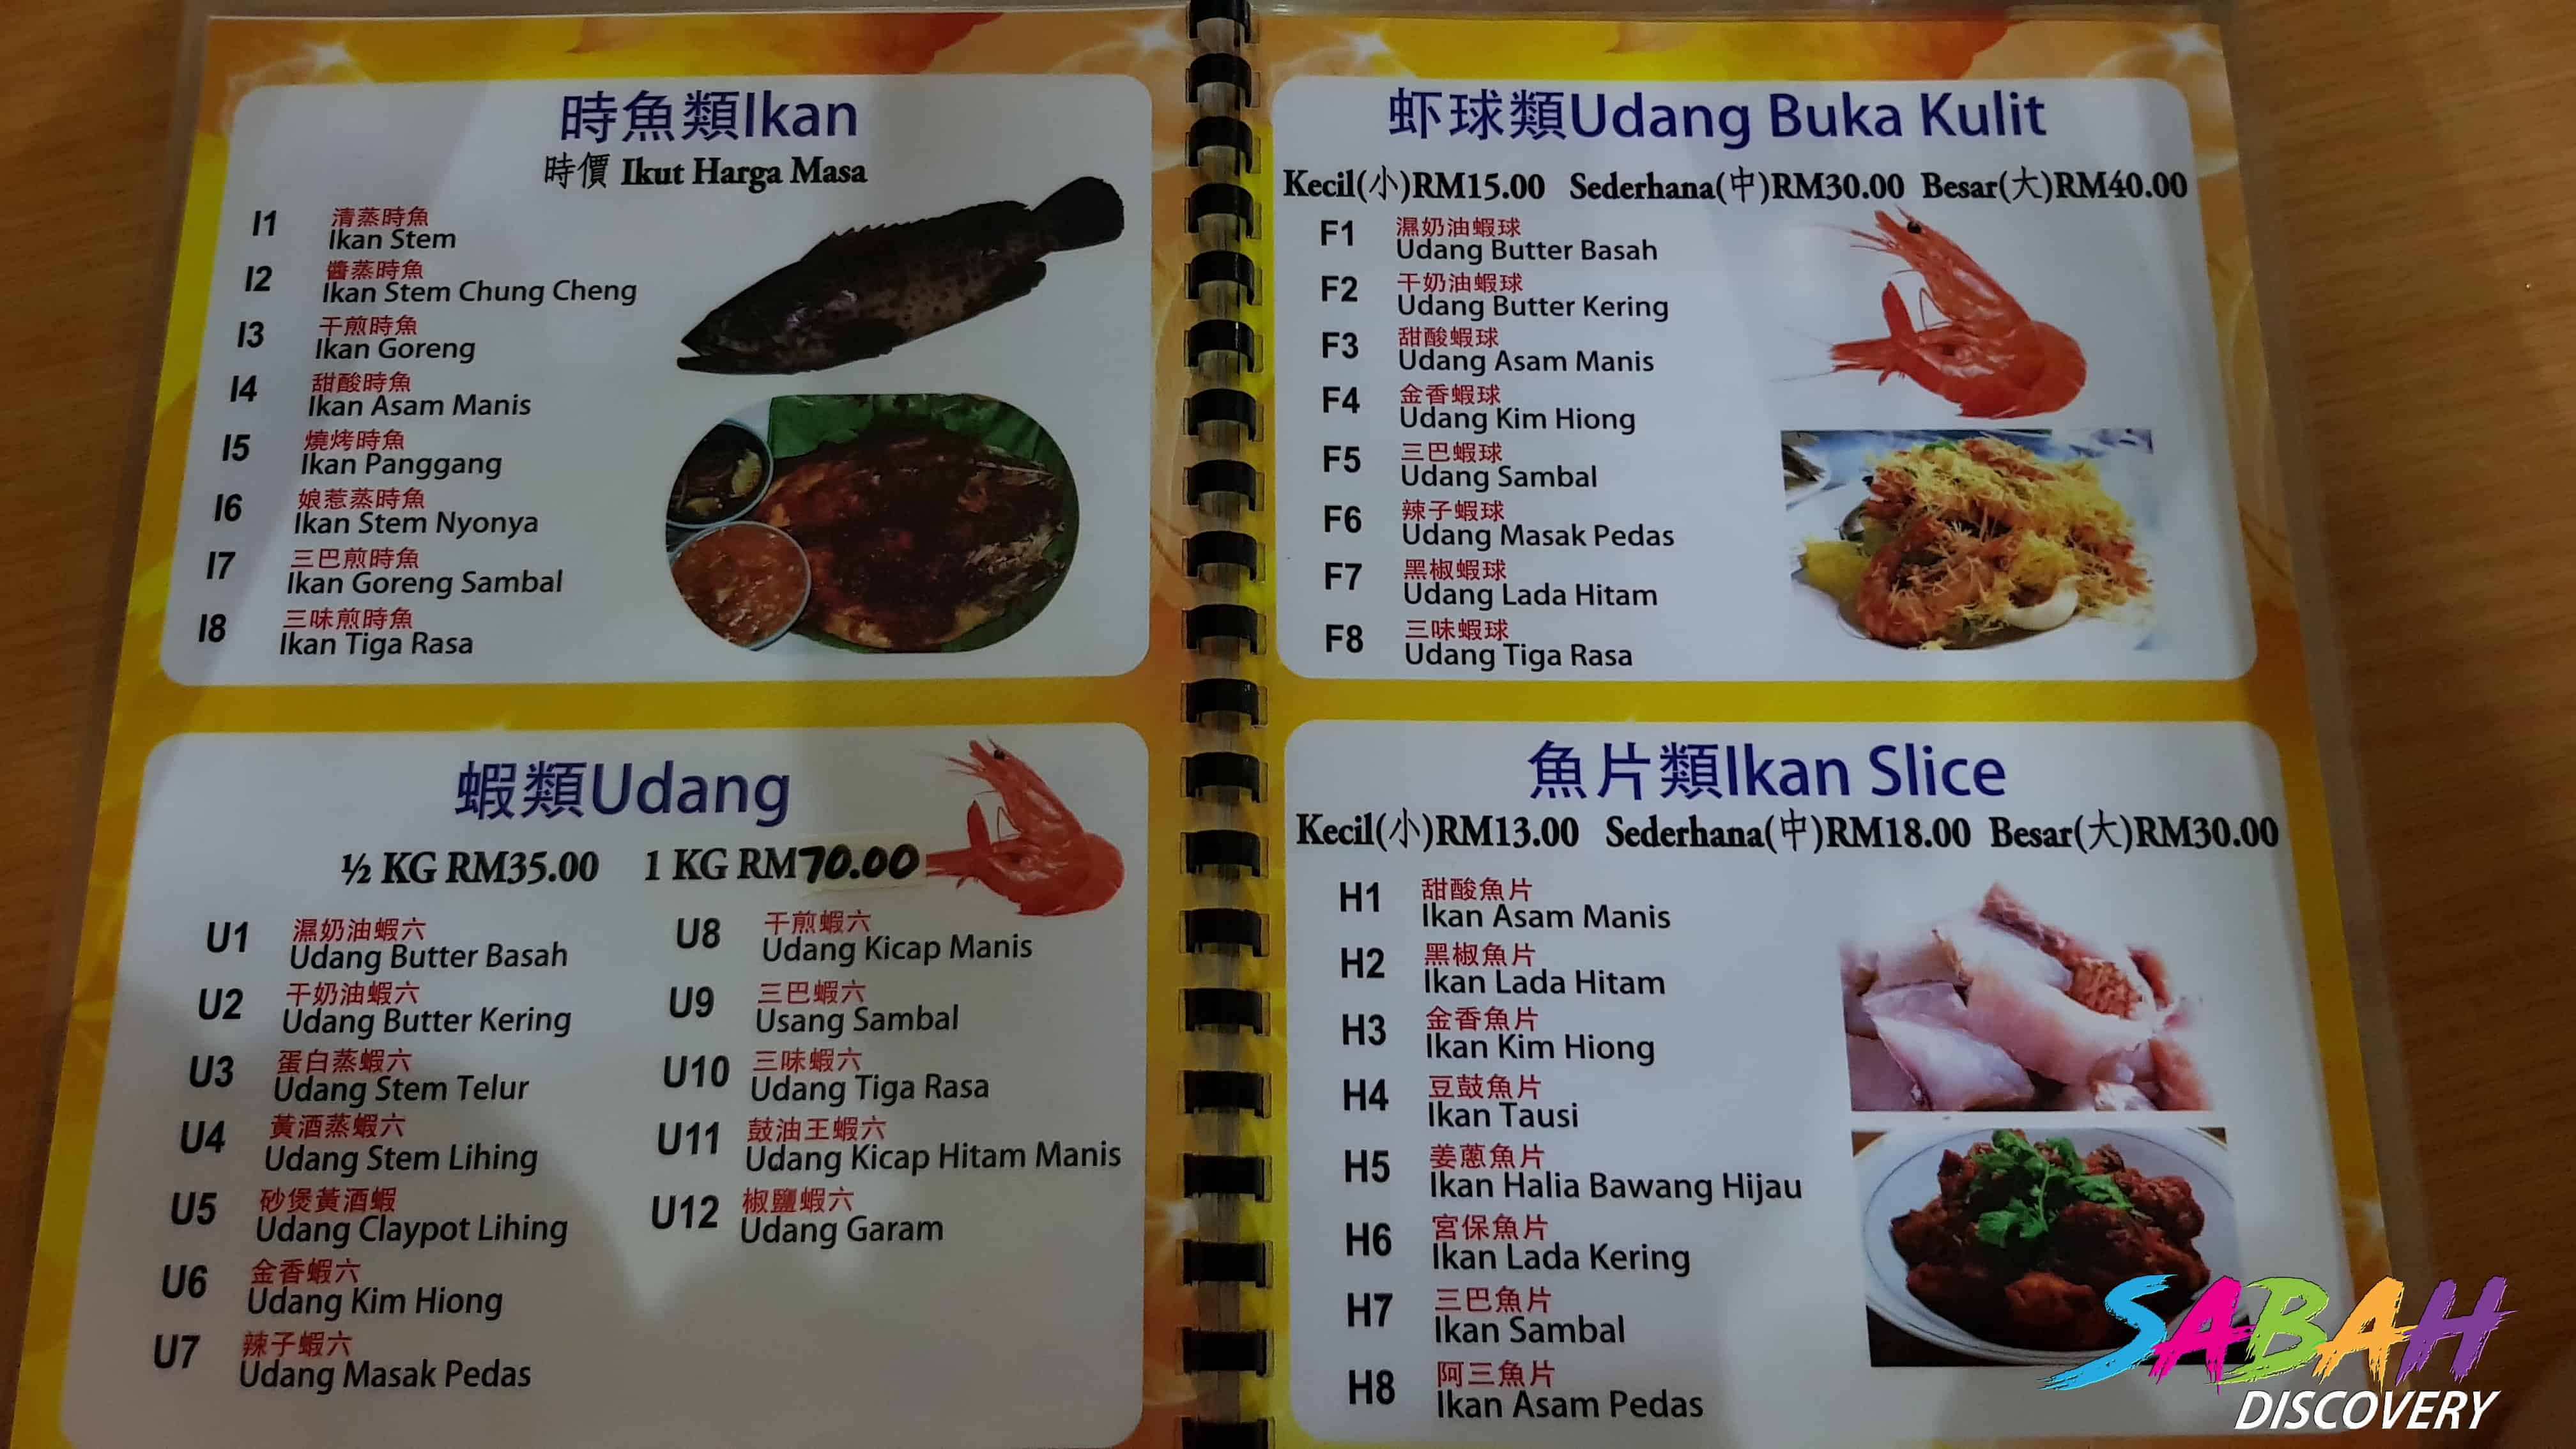 Penang Food Corner (槟城风味館) - Sabah Discovery